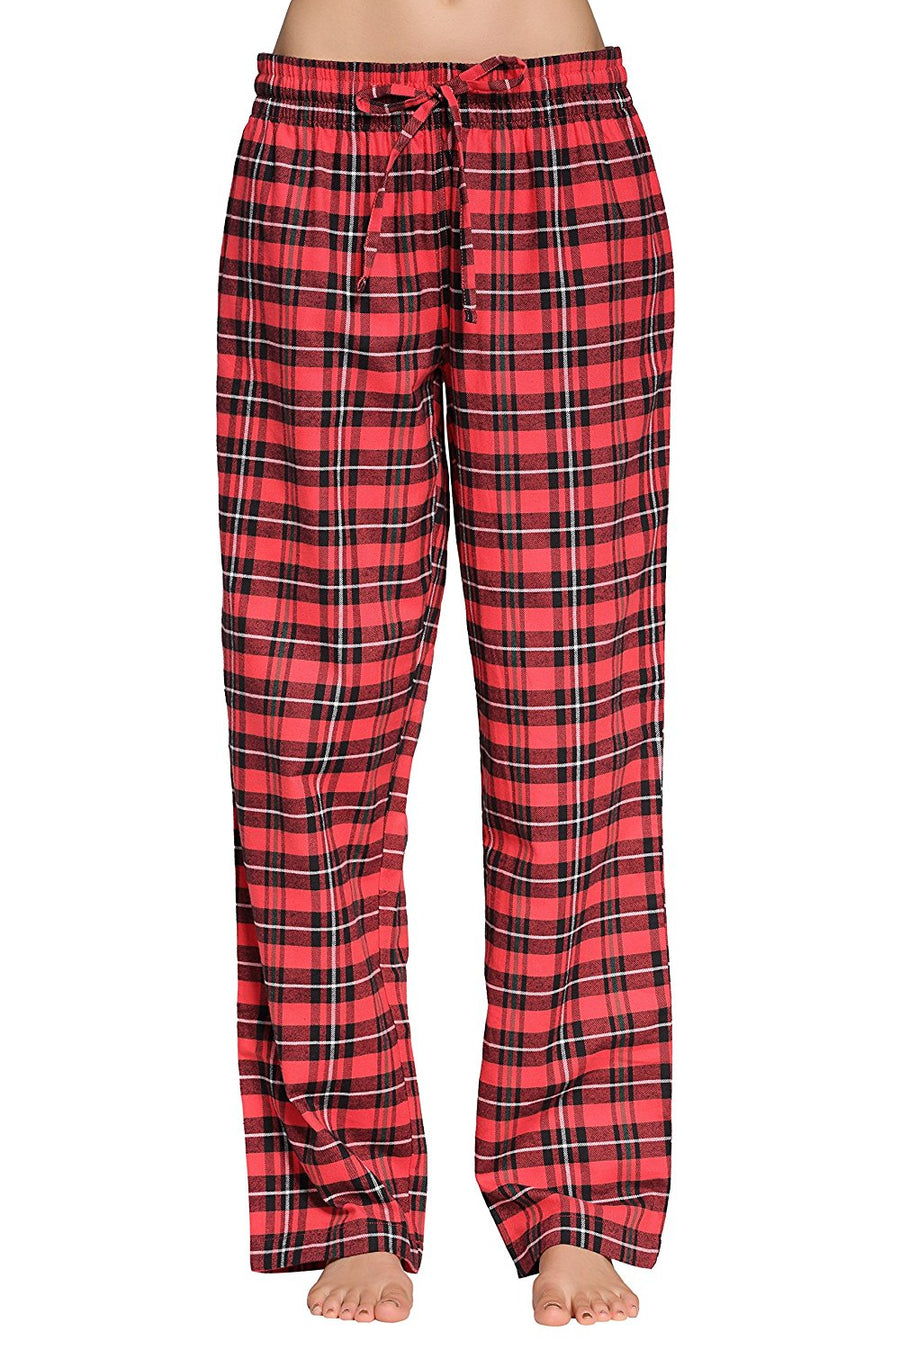 Men's Plush Sleep Pants: Red Buffalo Plaid Pants, Relaxed Fit